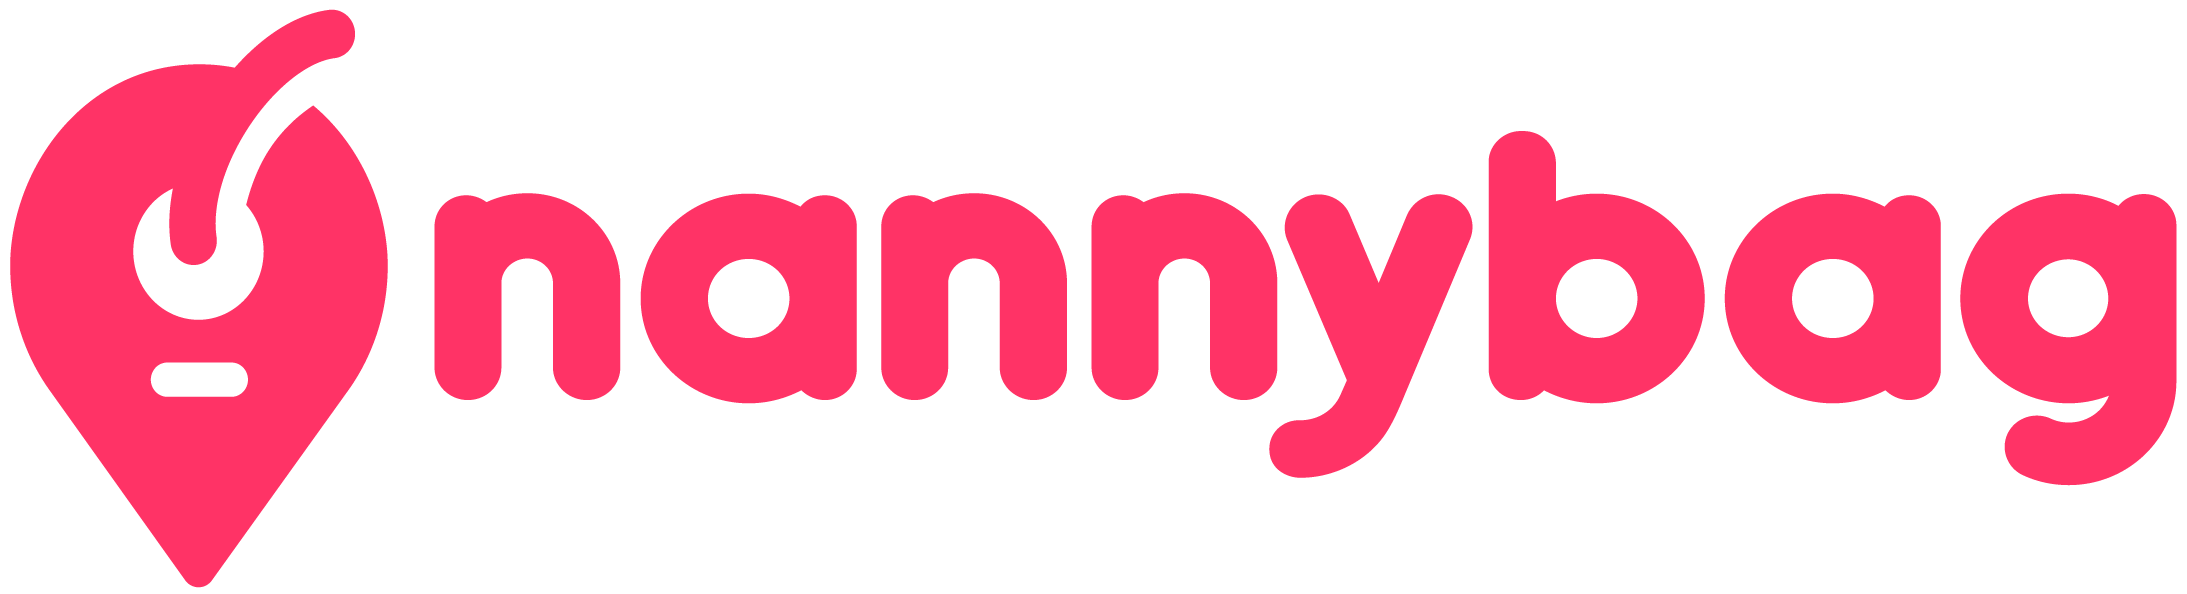 Logo nannybag